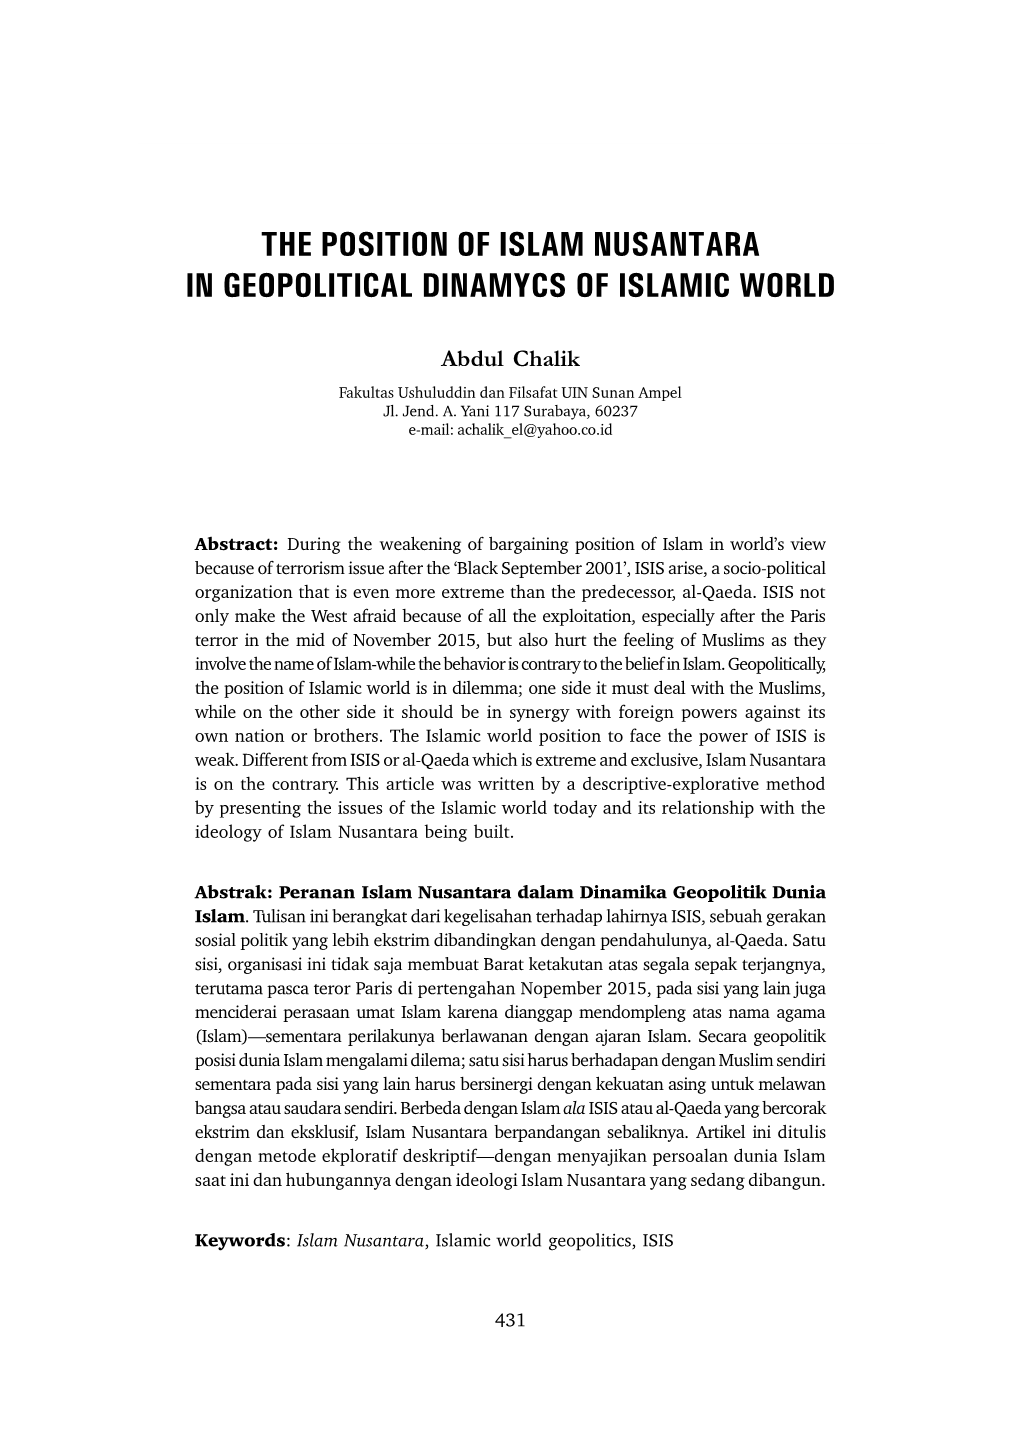 The Position of Islam Nusantara in Geopolitical Dinamycs of Islamic World